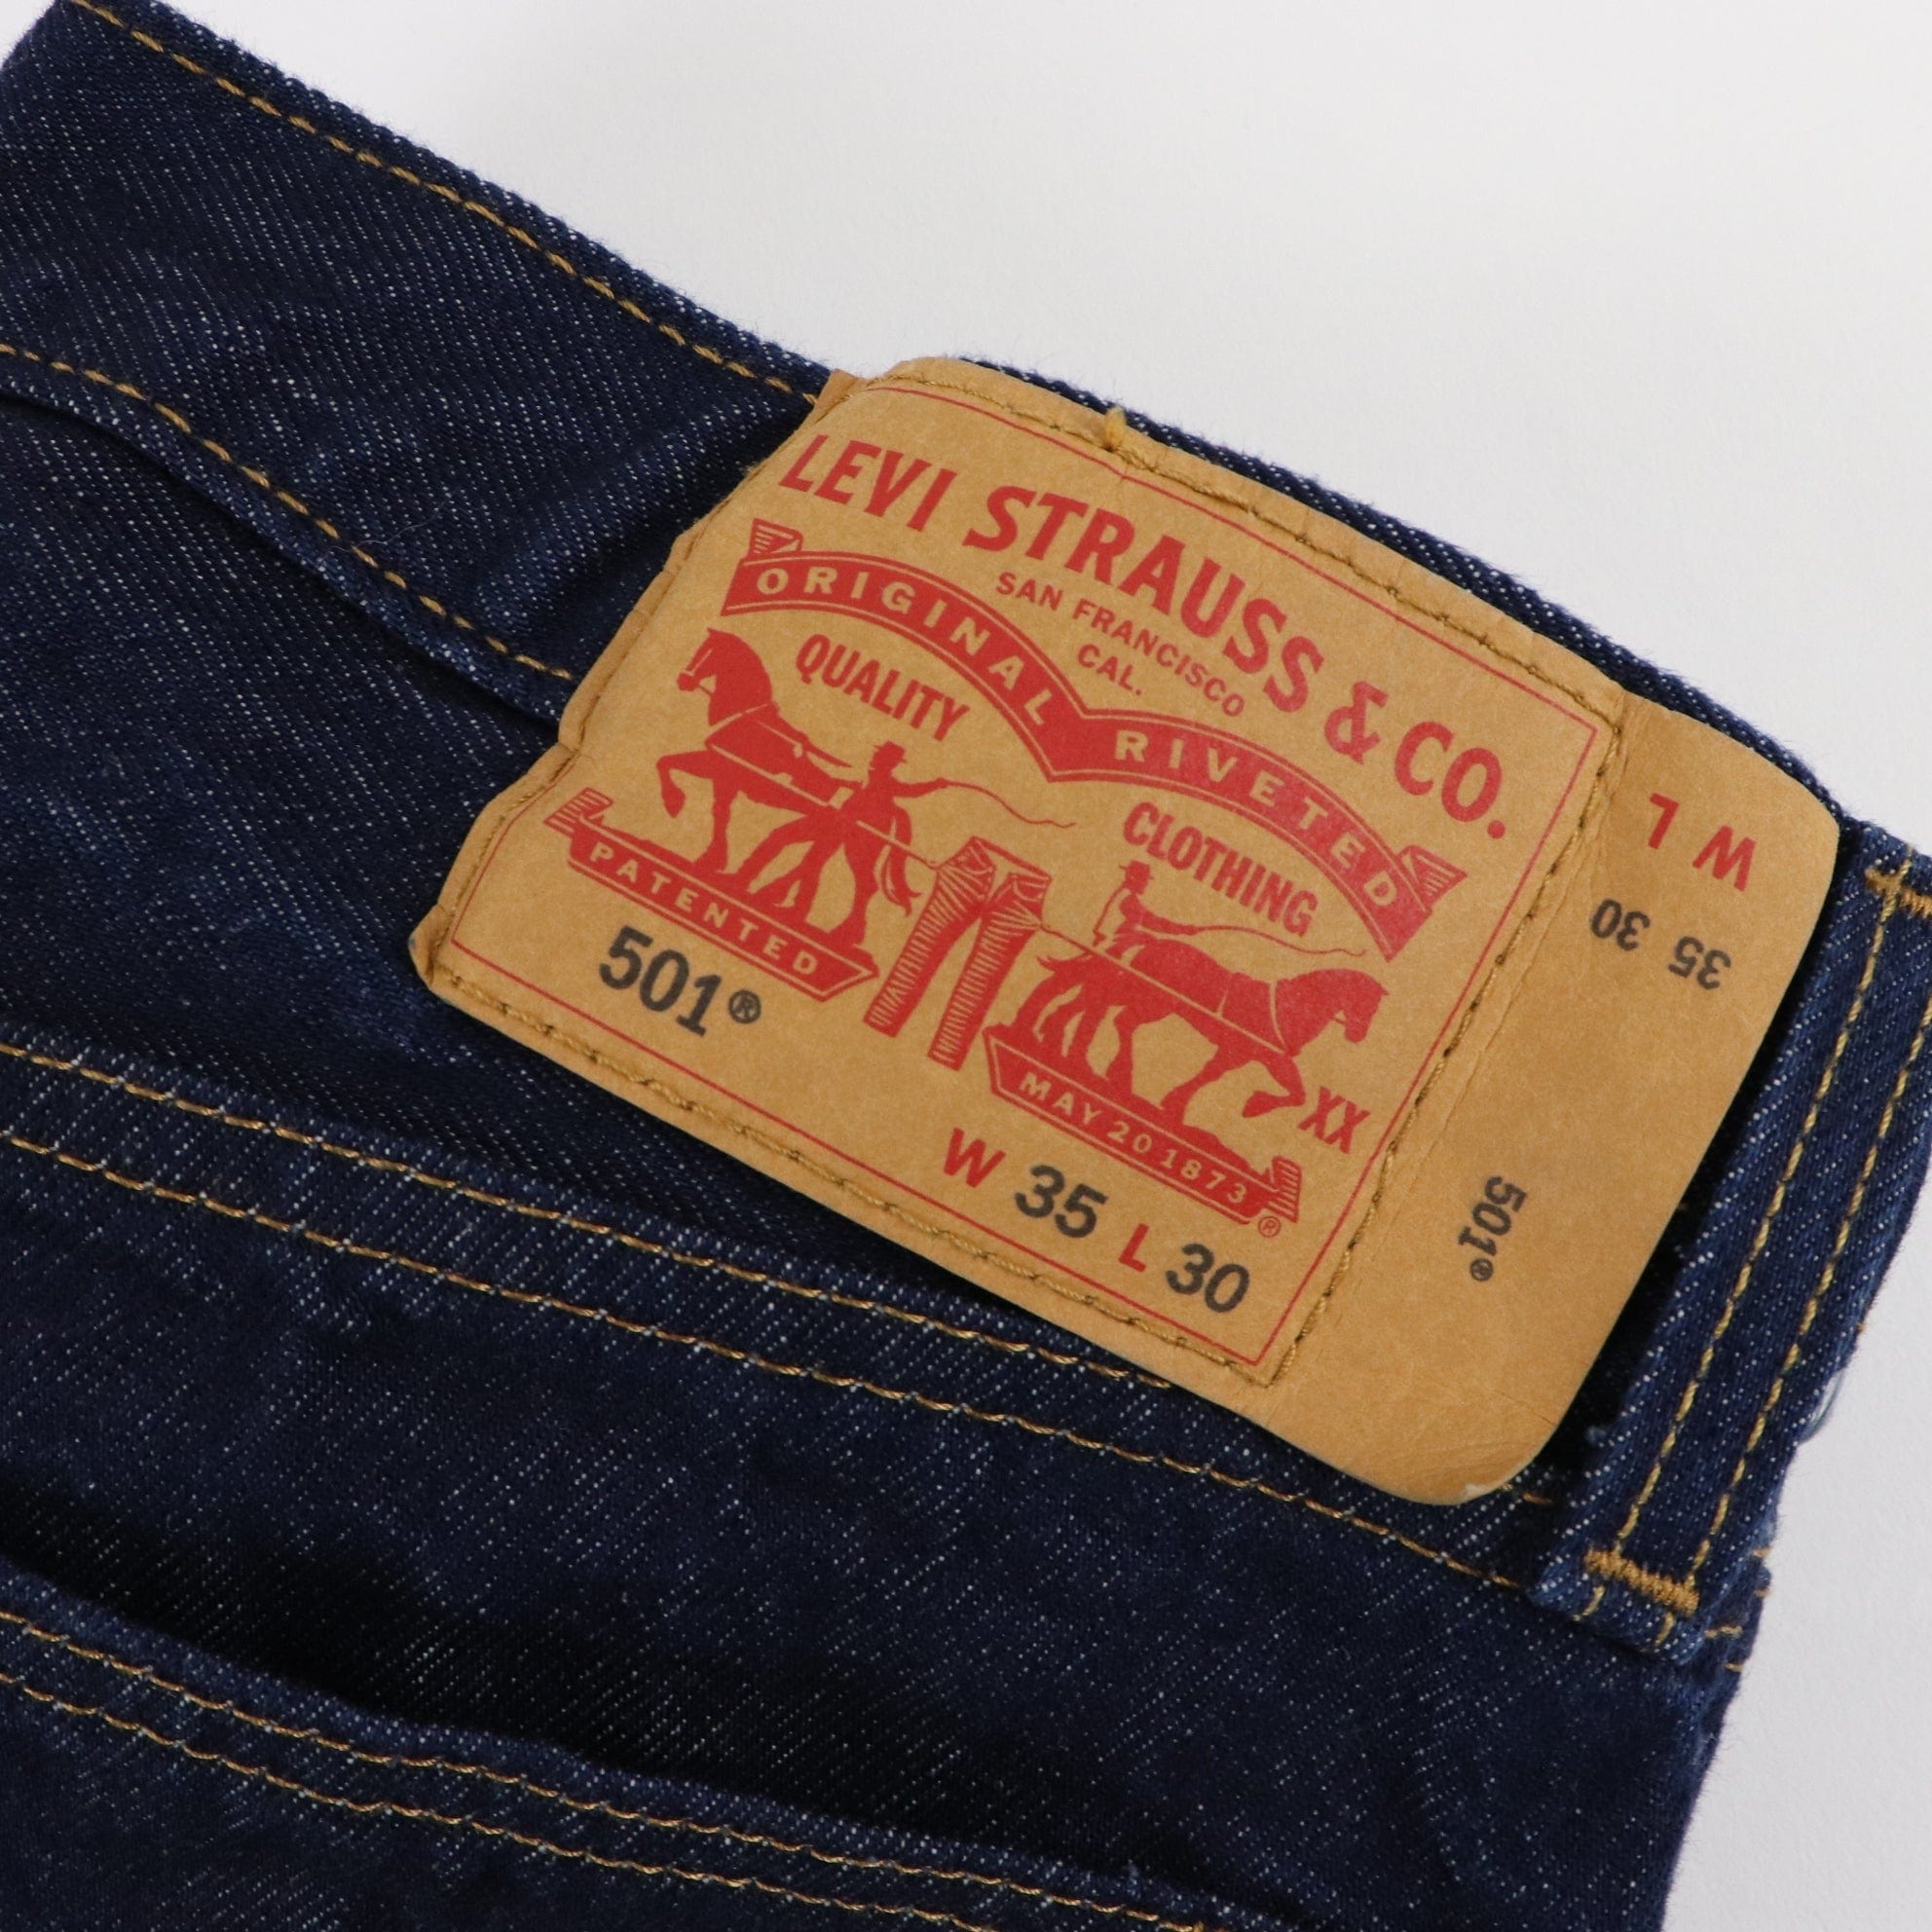 Levi's 501 Original Fit Denim Jeans Size 35 x 30 Fits 35 x 28